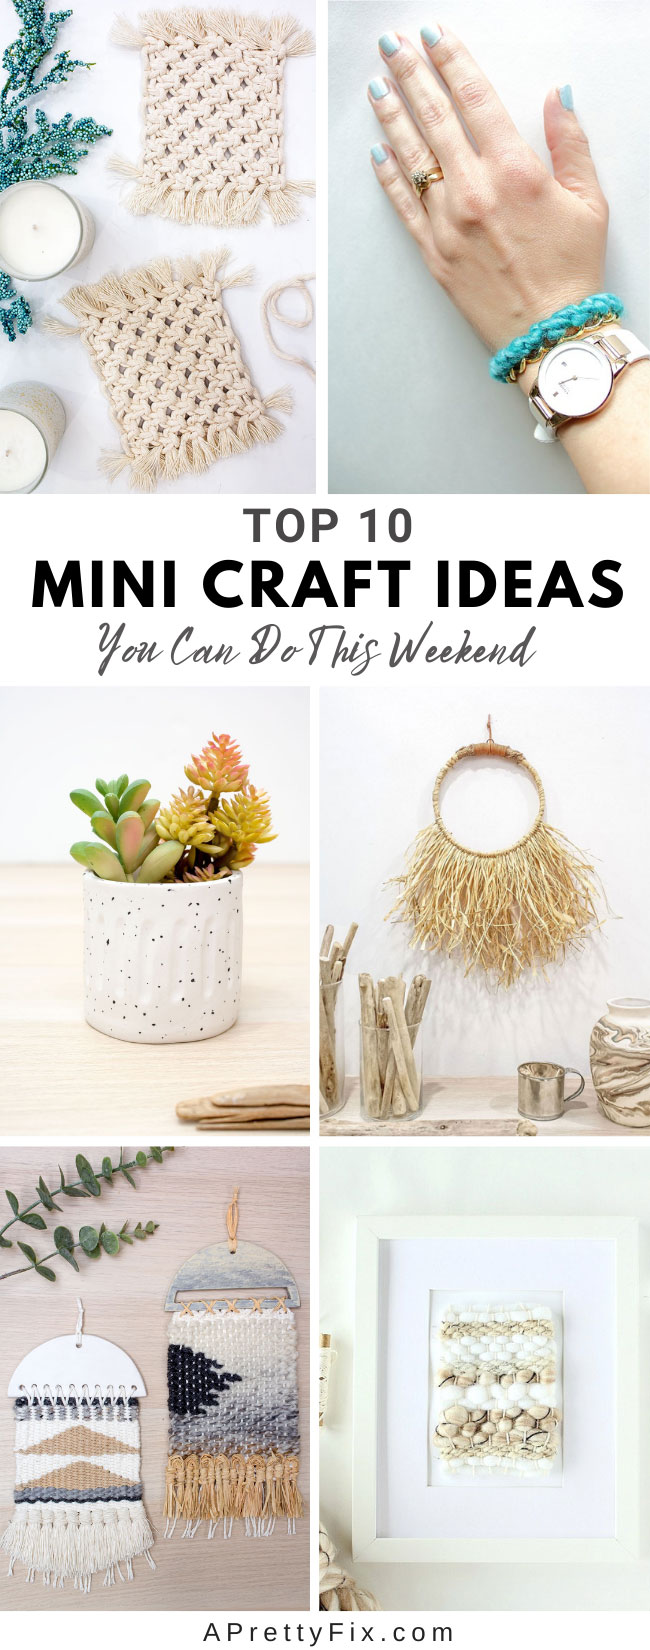 Top 10 Mini Crafts from A Pretty Fix (my faves!) - A Pretty Fix